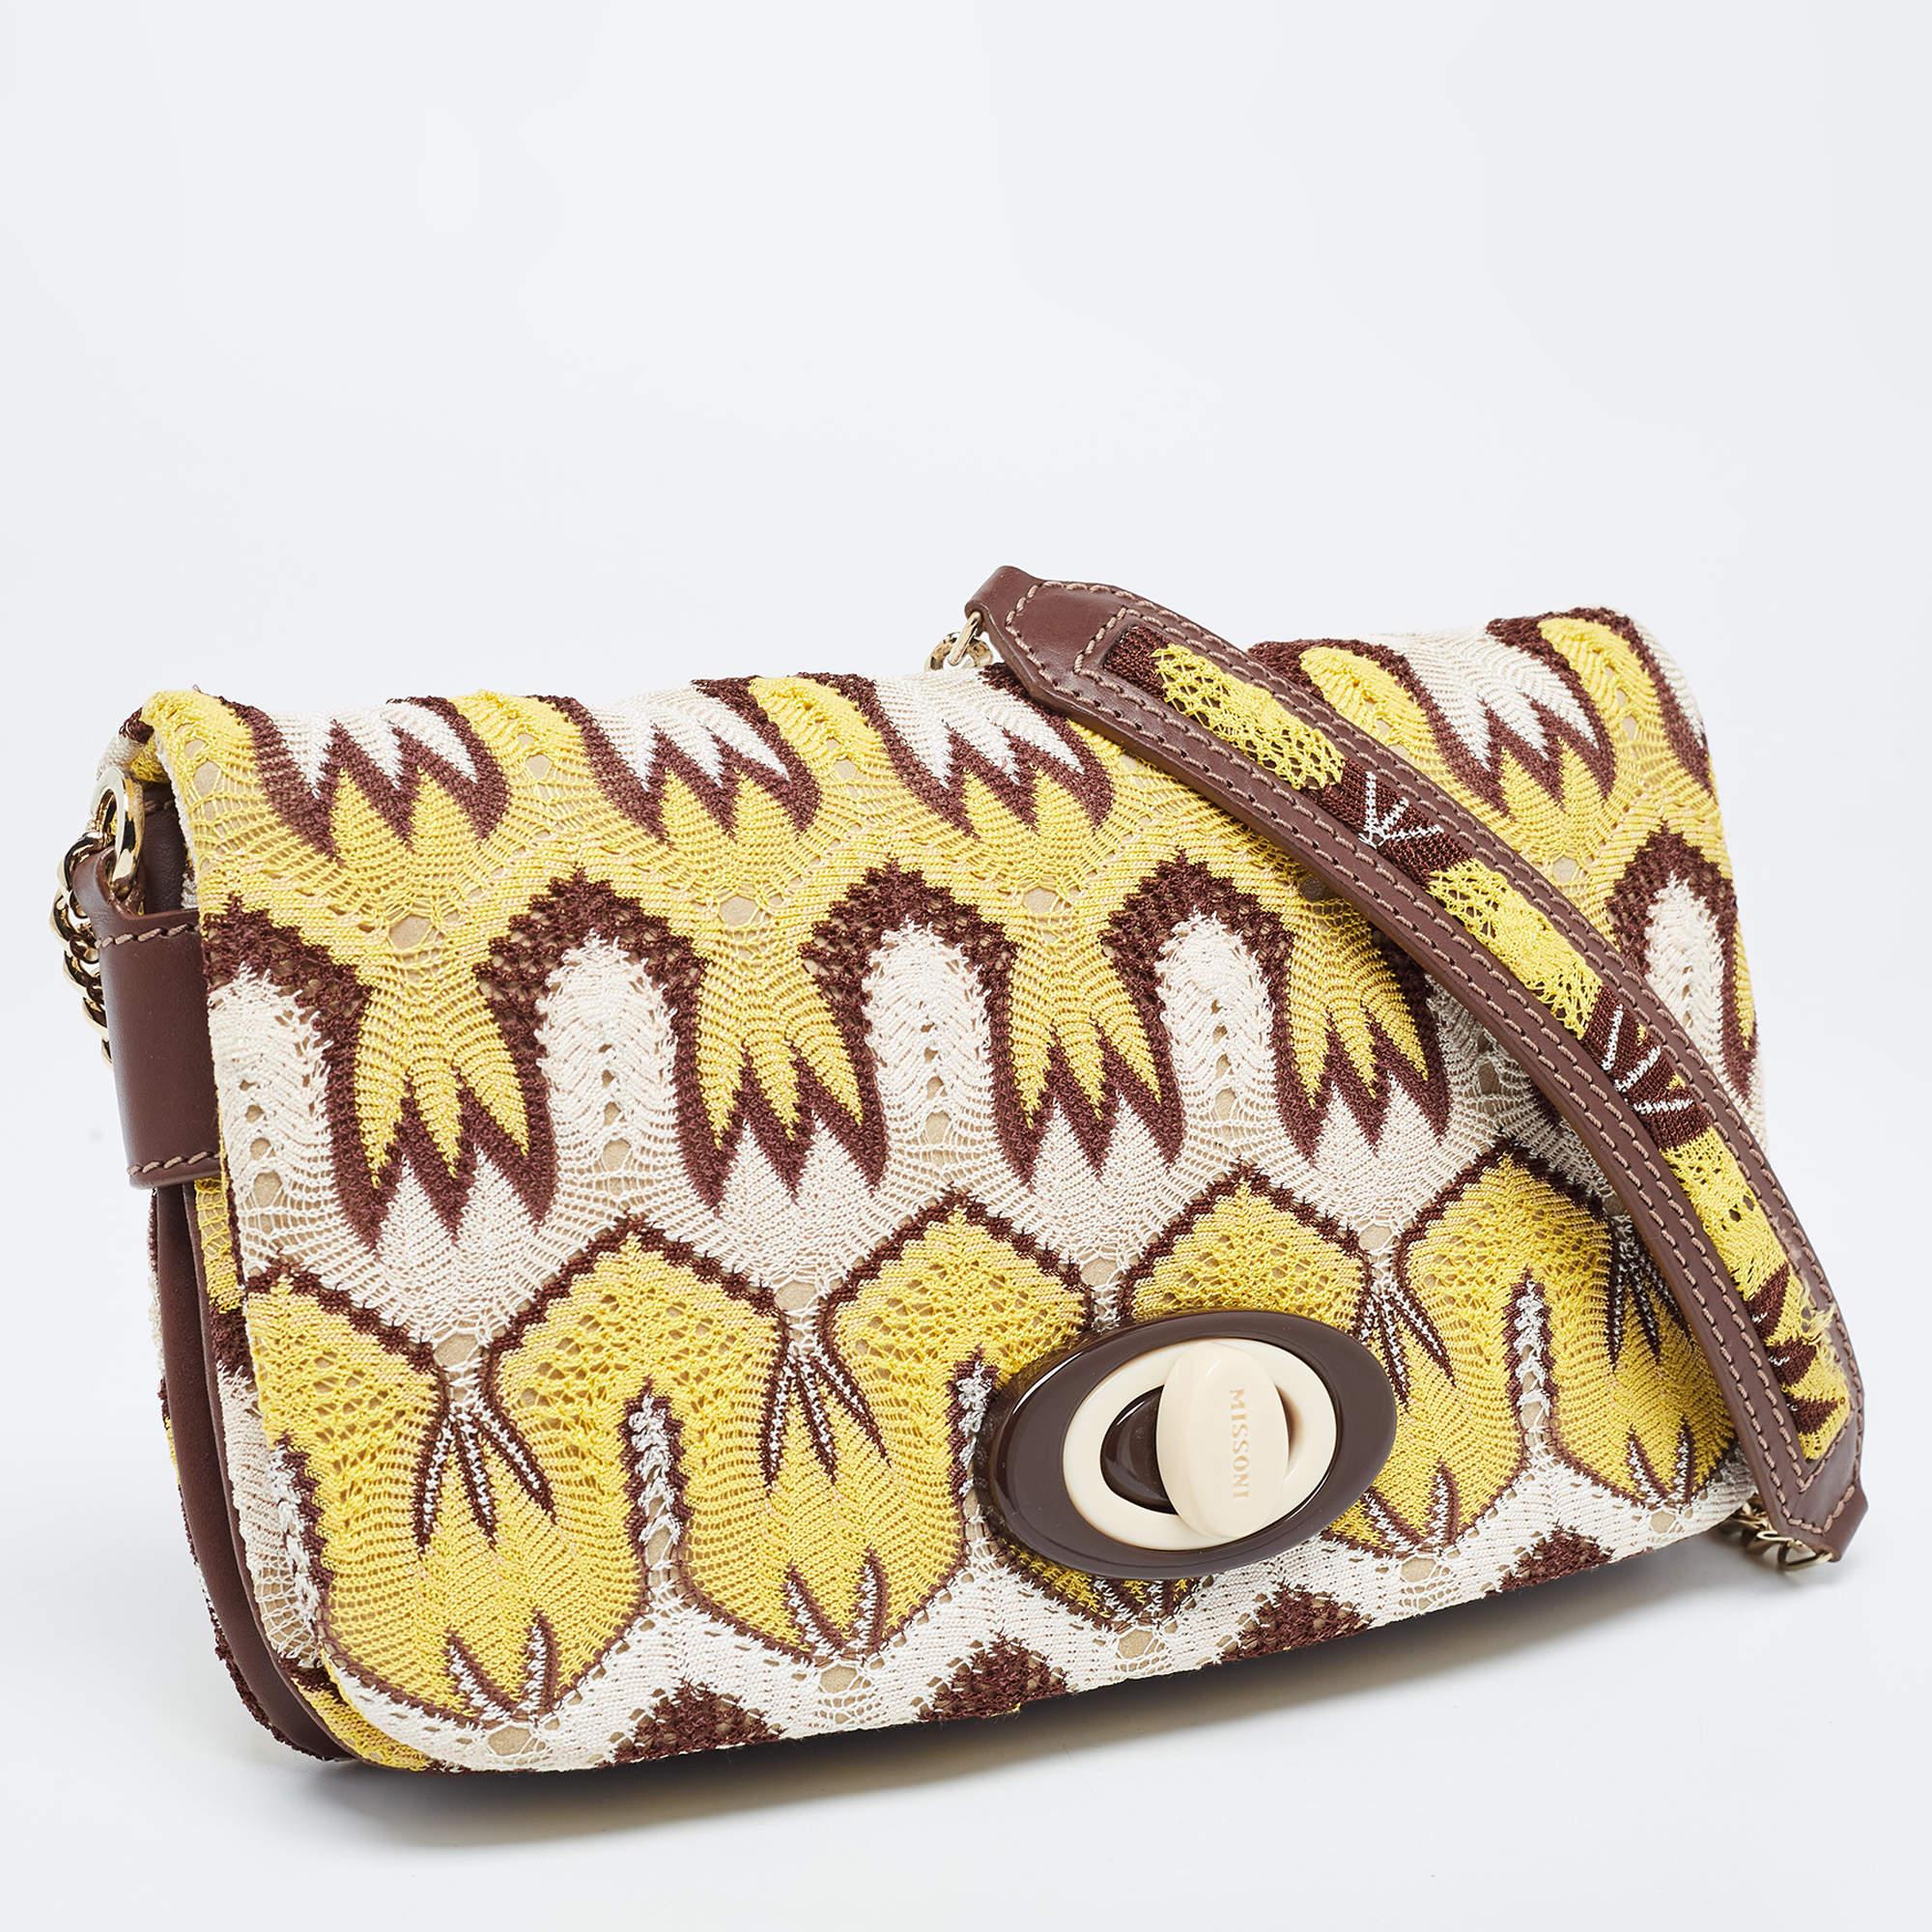 Missoni Tricolor Crochet Fabric and Leather Flap Shoulder Bag In Excellent Condition For Sale In Dubai, Al Qouz 2